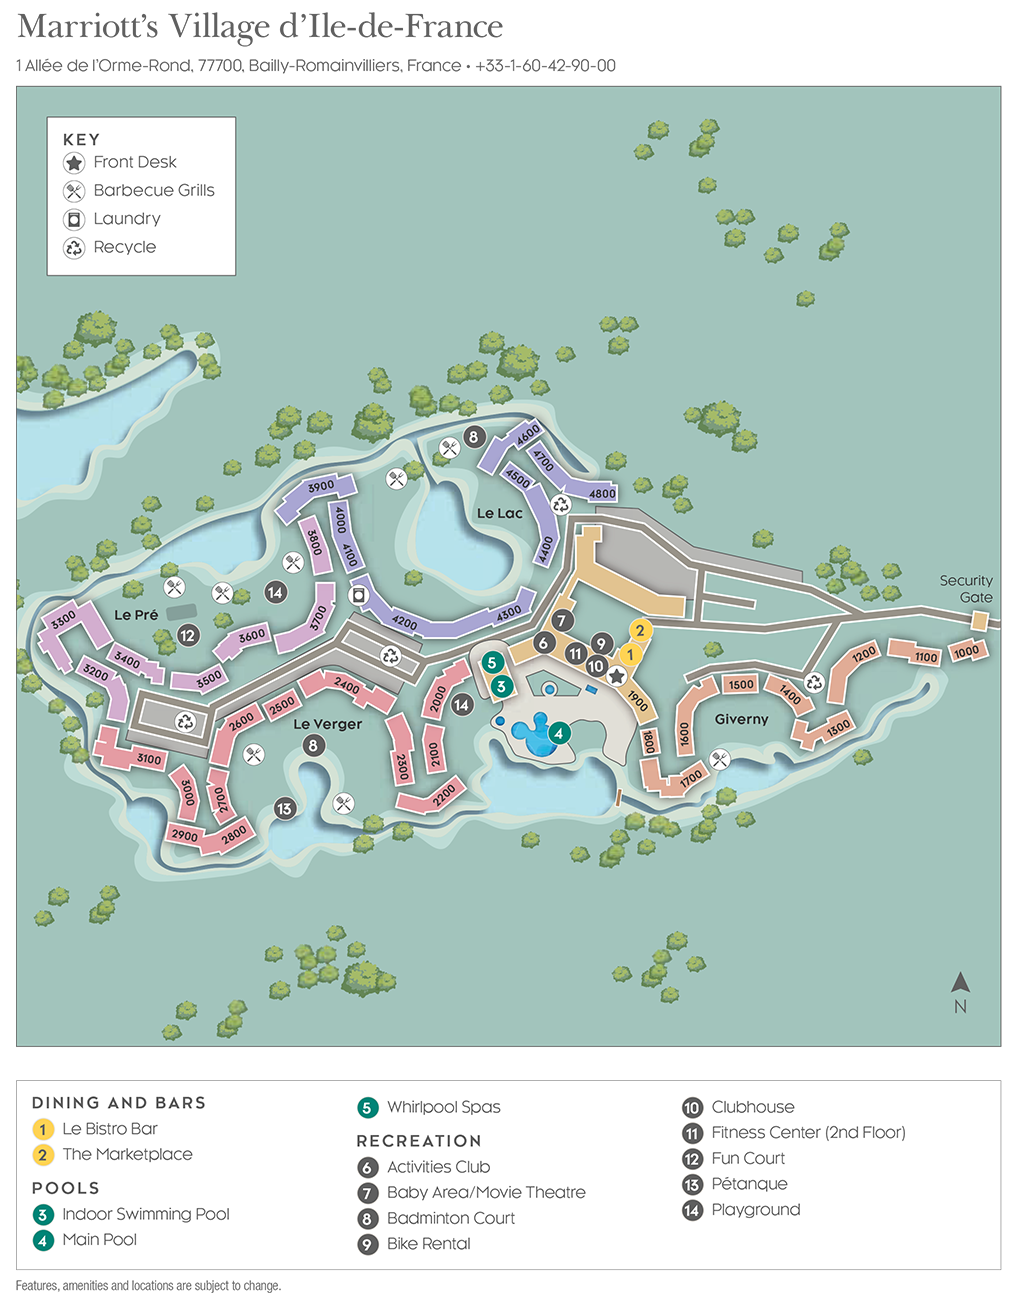 Marriott Village d'Ile-de-France Resort Map